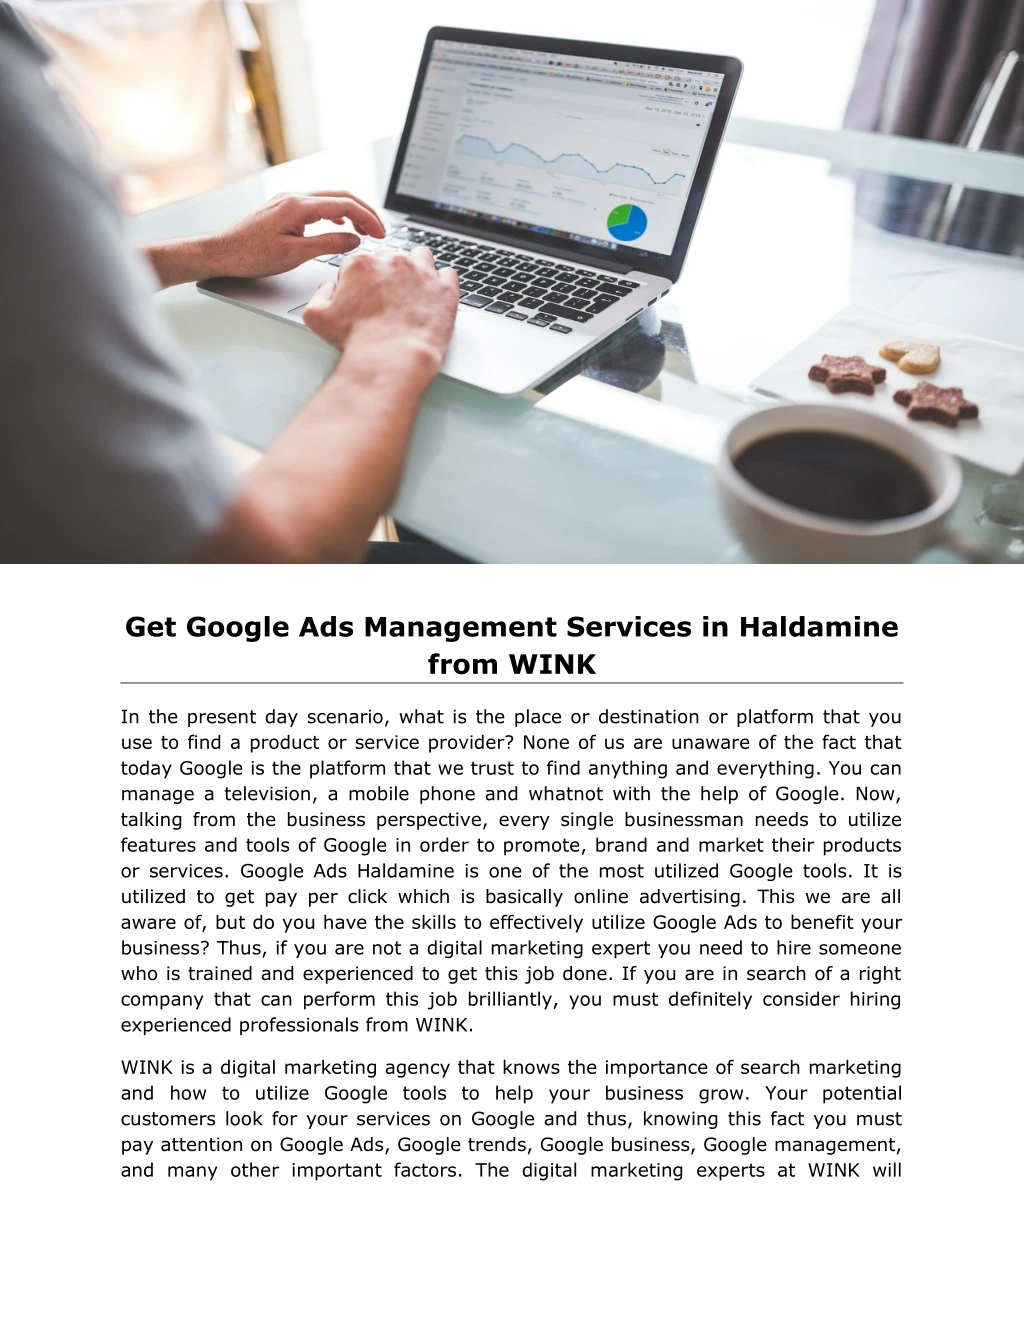 get google ads management services in haldamine